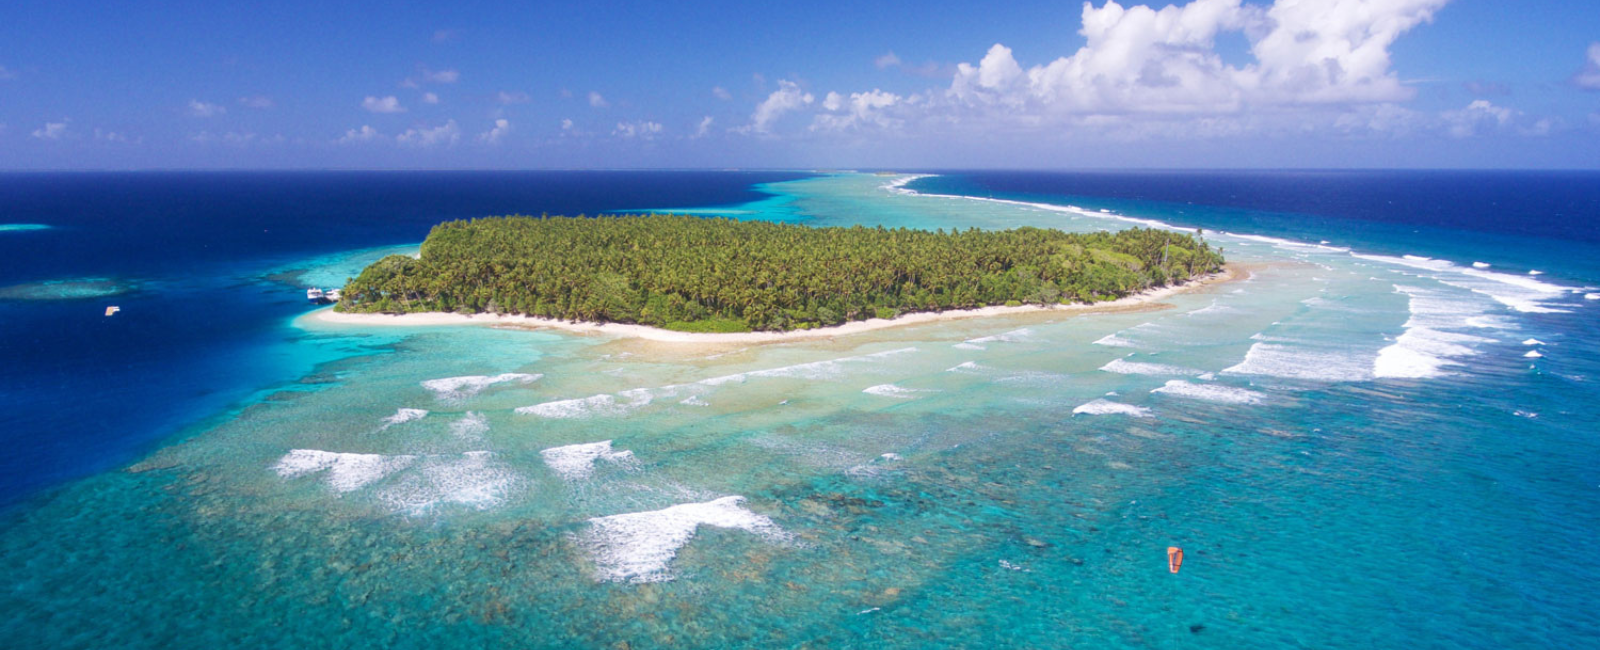 Beran Island, Marshall Islands